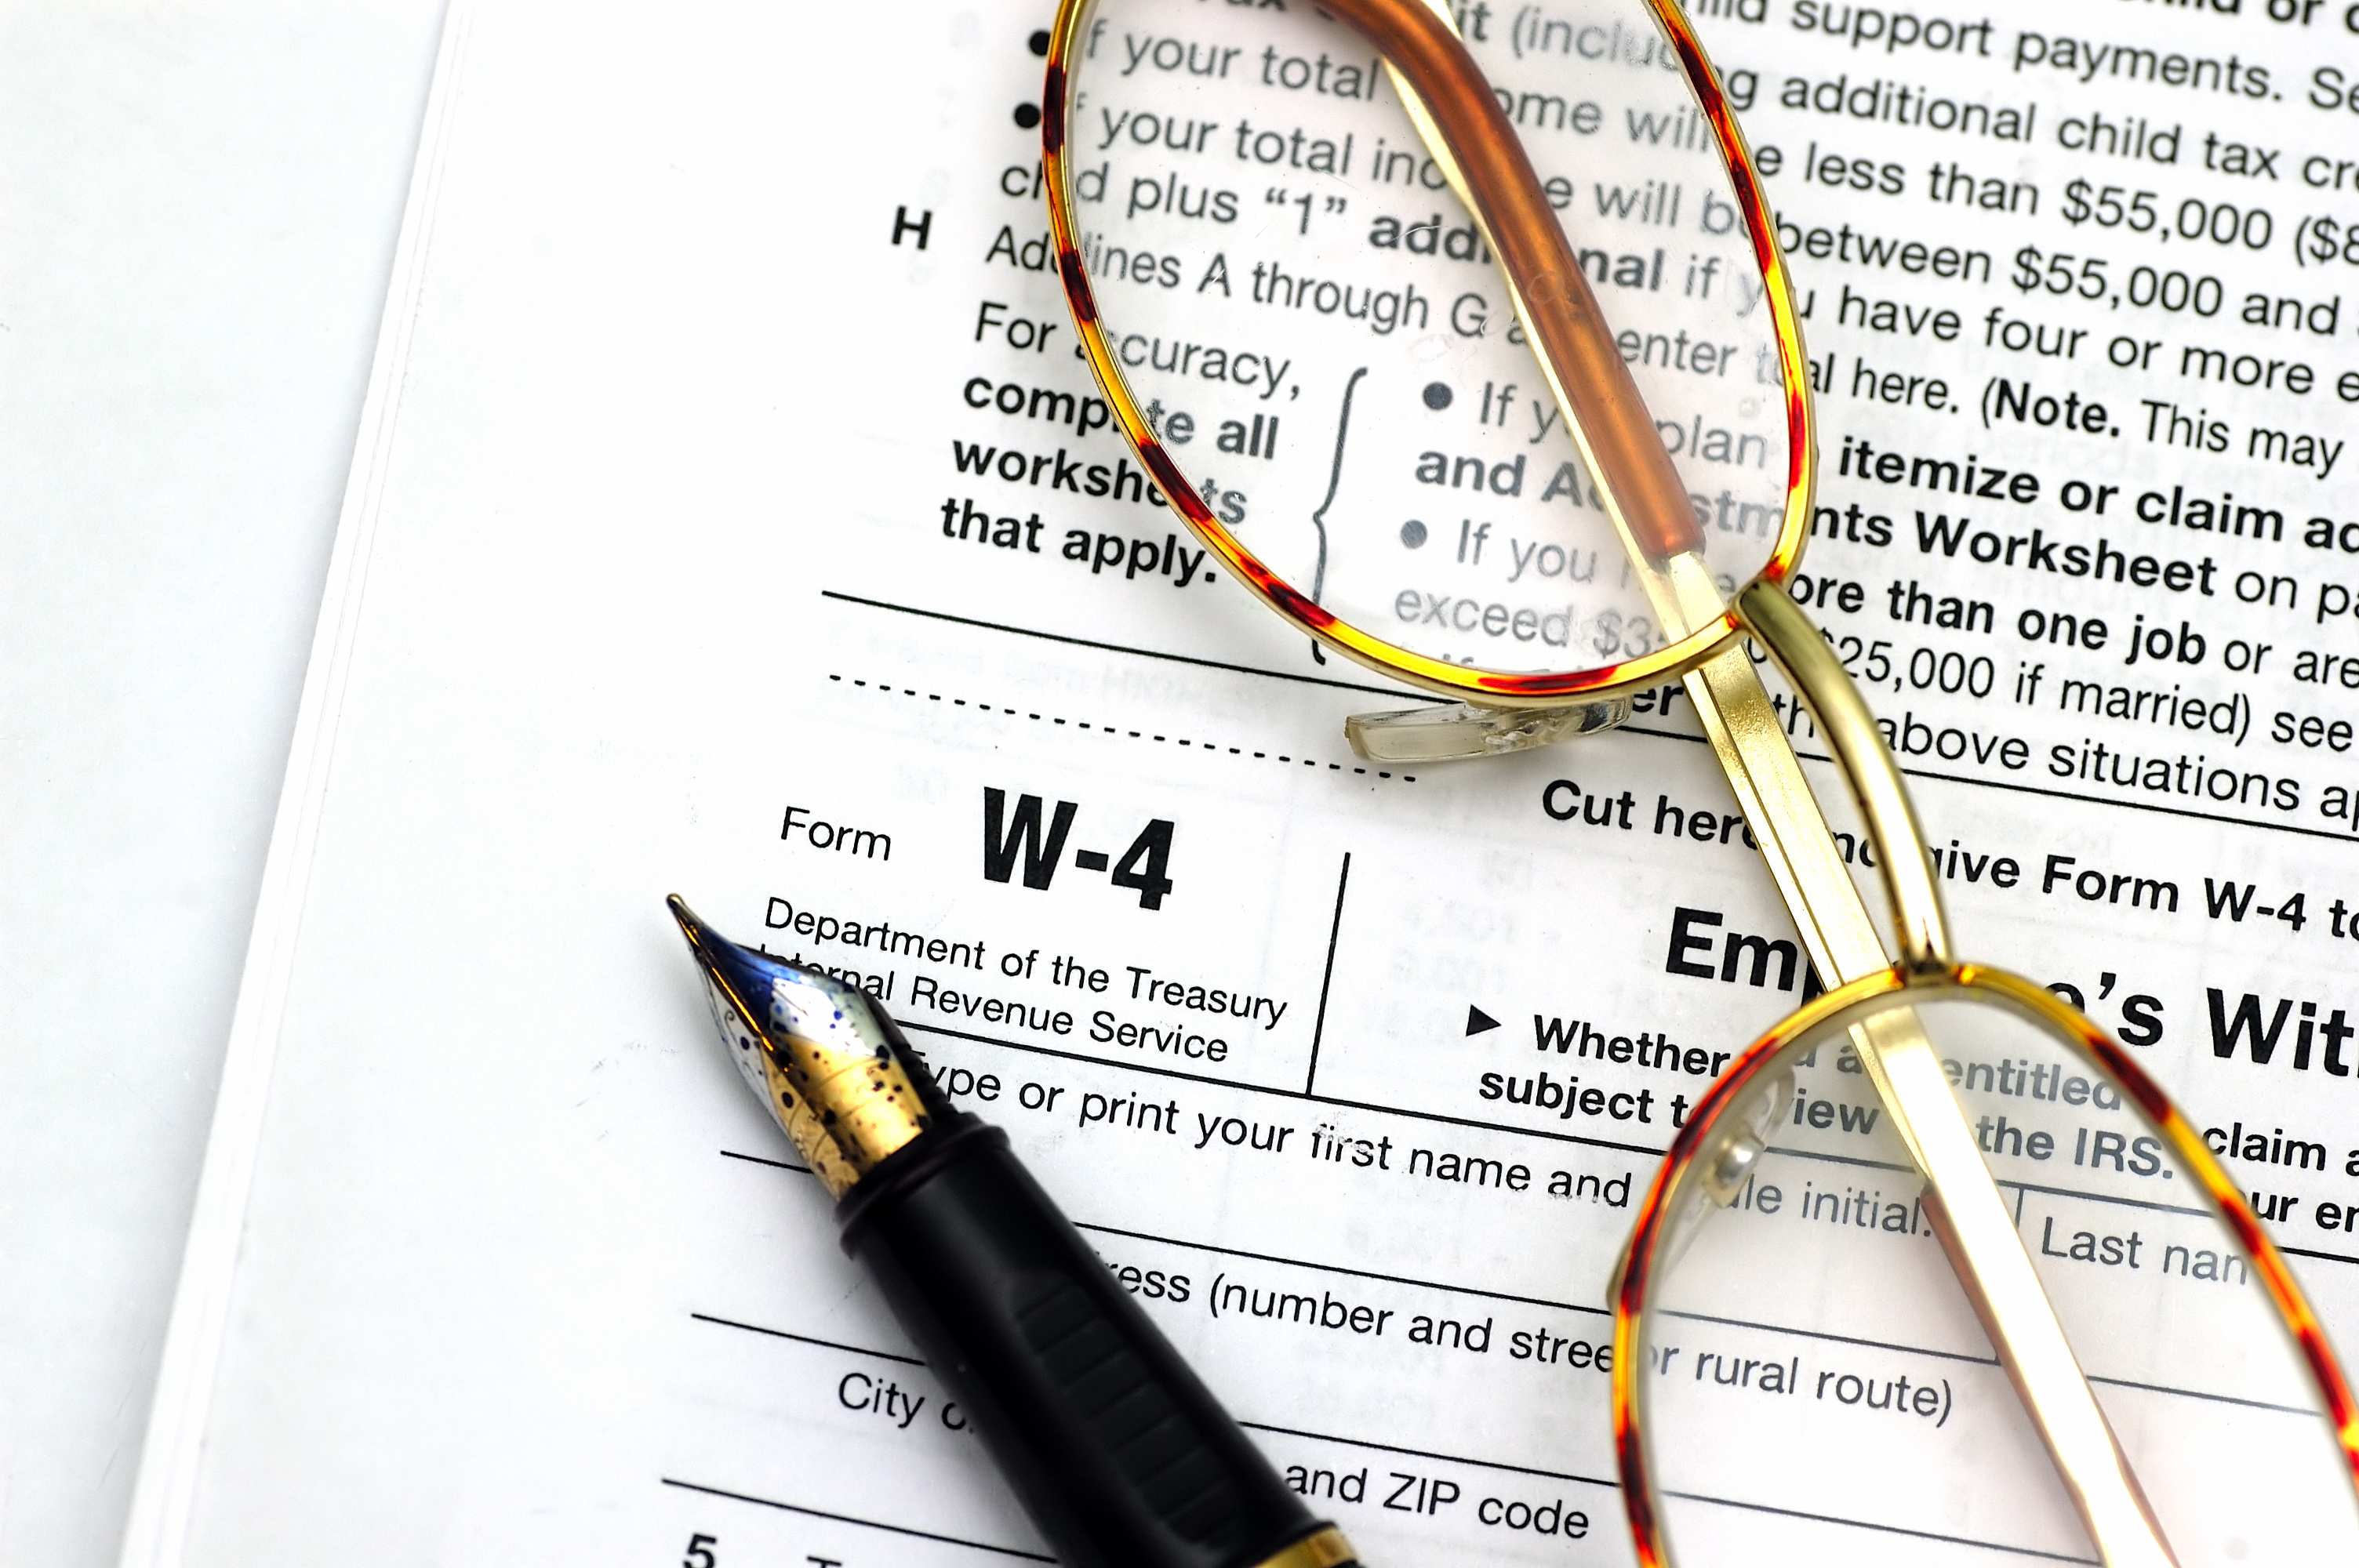 Employers Beware: IRS Planning Major Overhaul of Form W-4